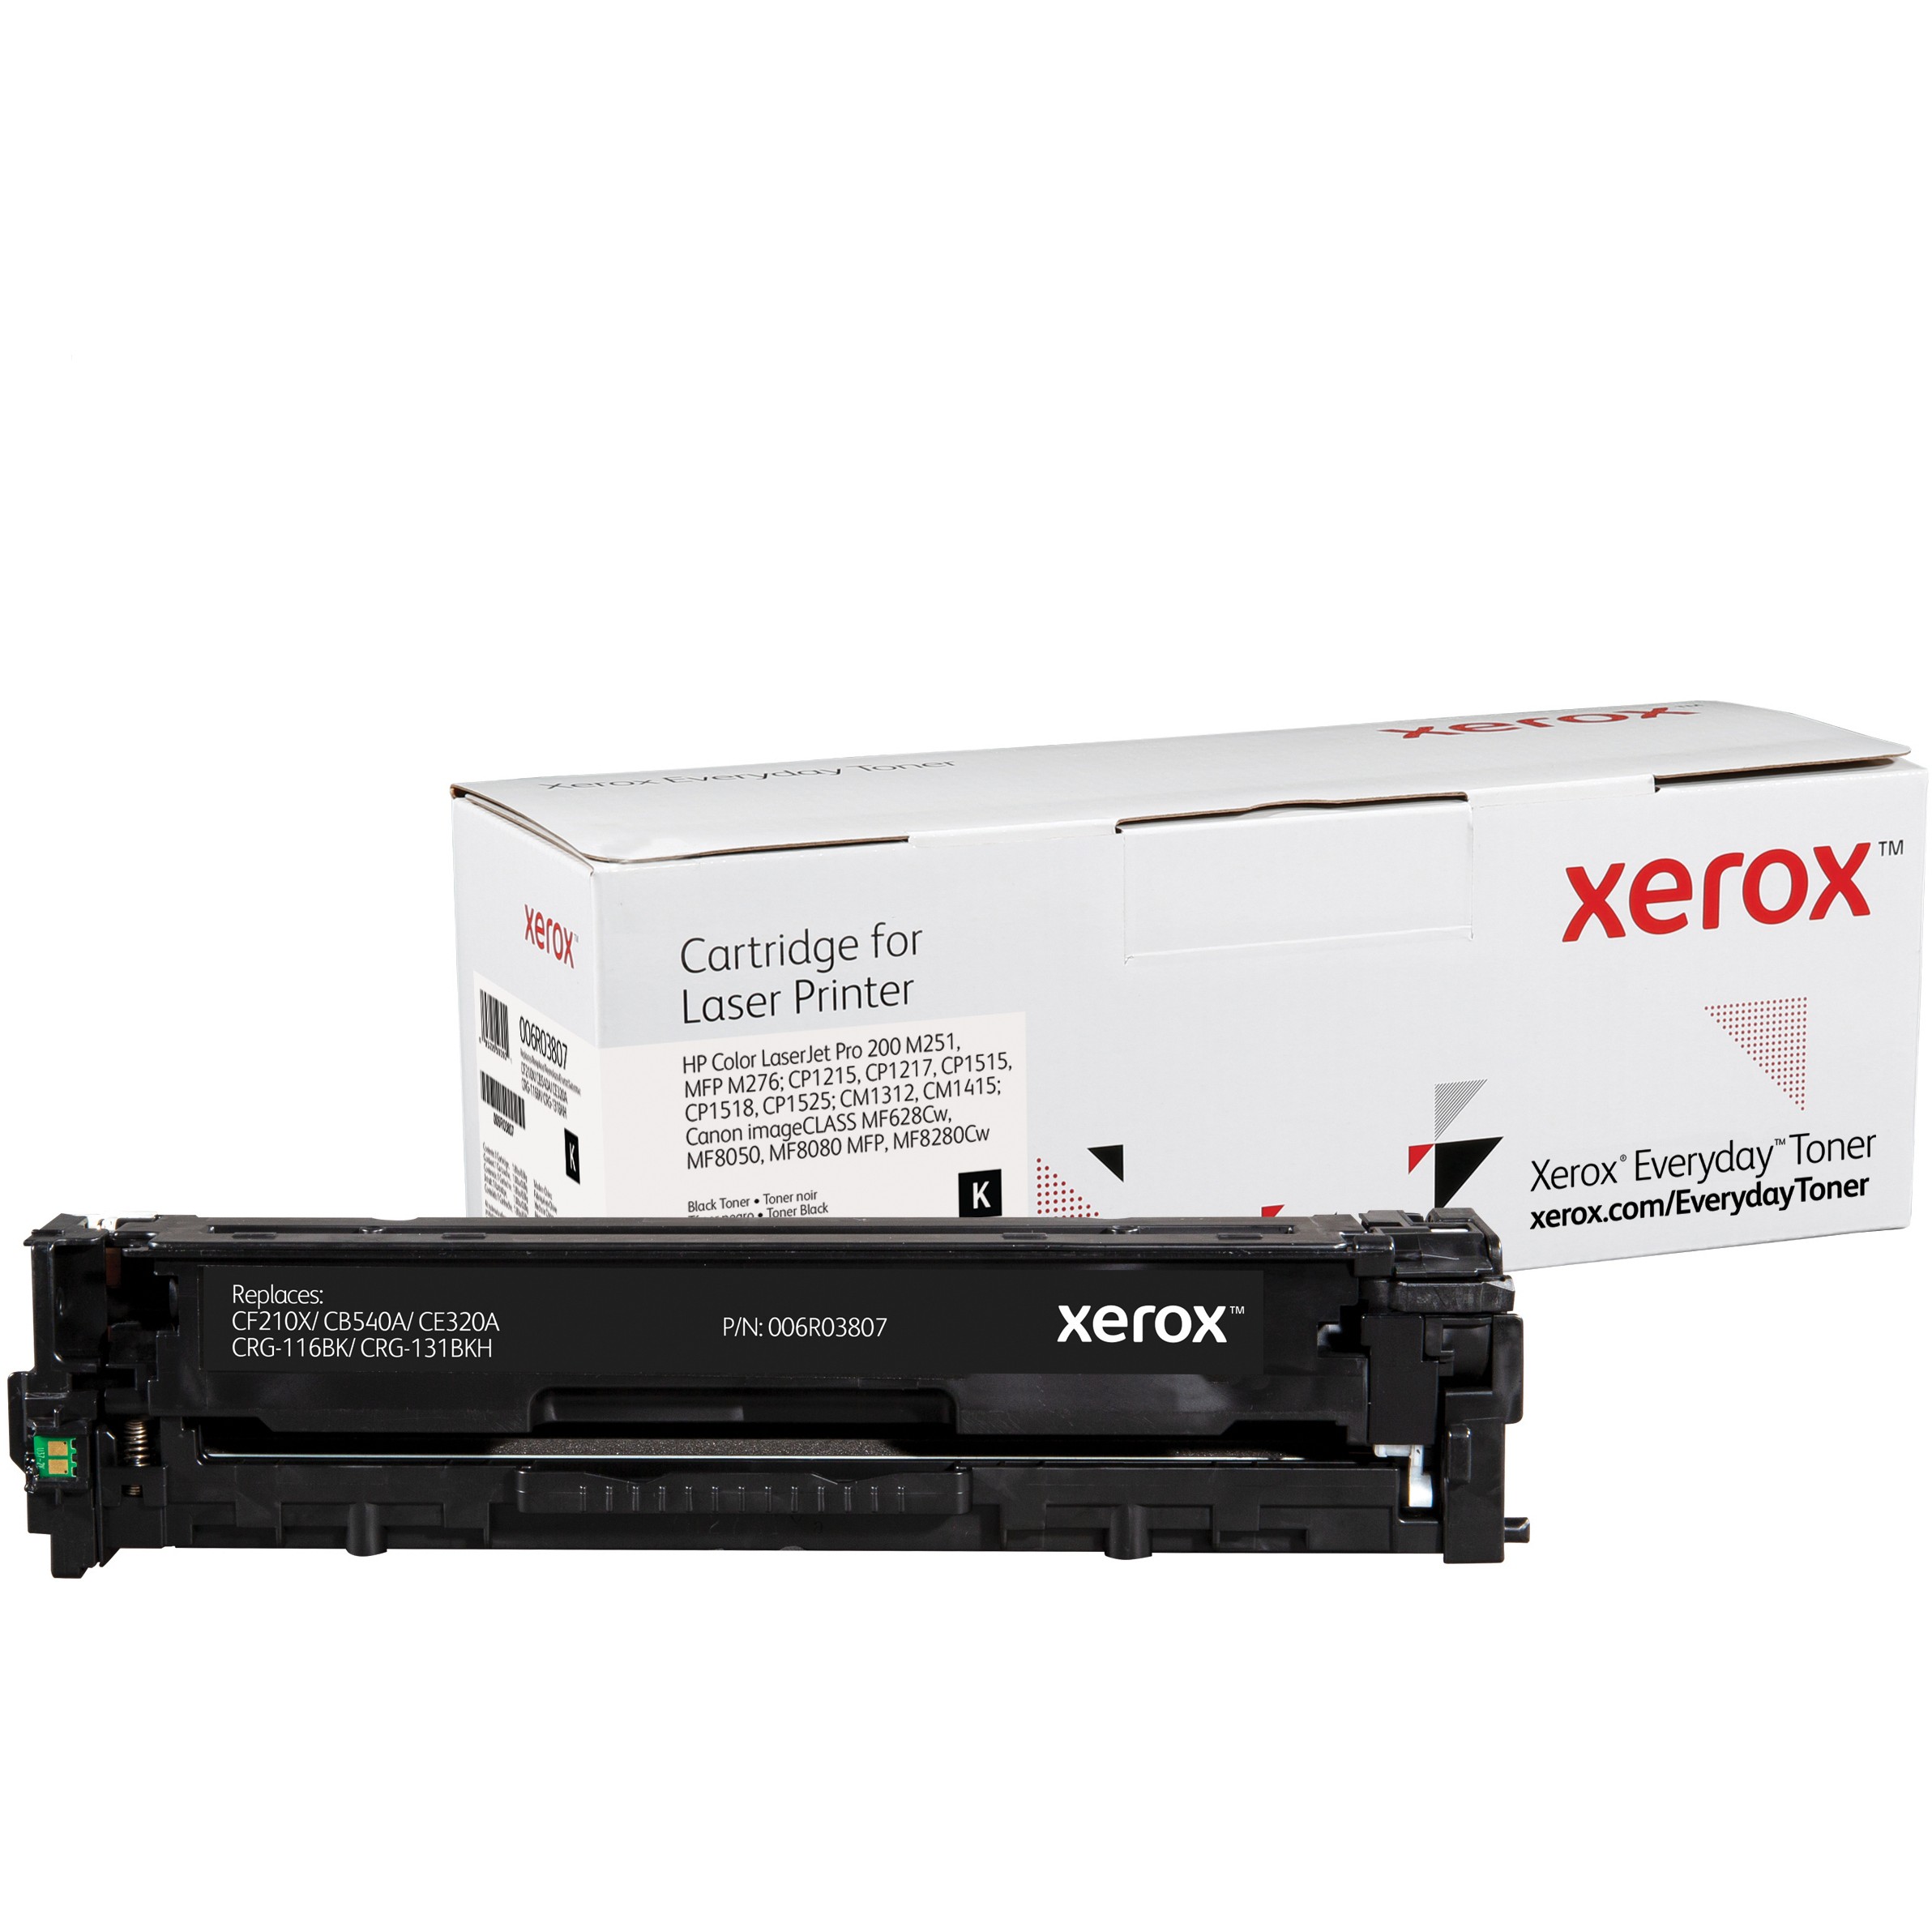 TON Xerox Everyday Toner 006R03807 Schwarz alternativ zu HP Toner 131X / 125A / 128A CF210X / CB540A / CE320A